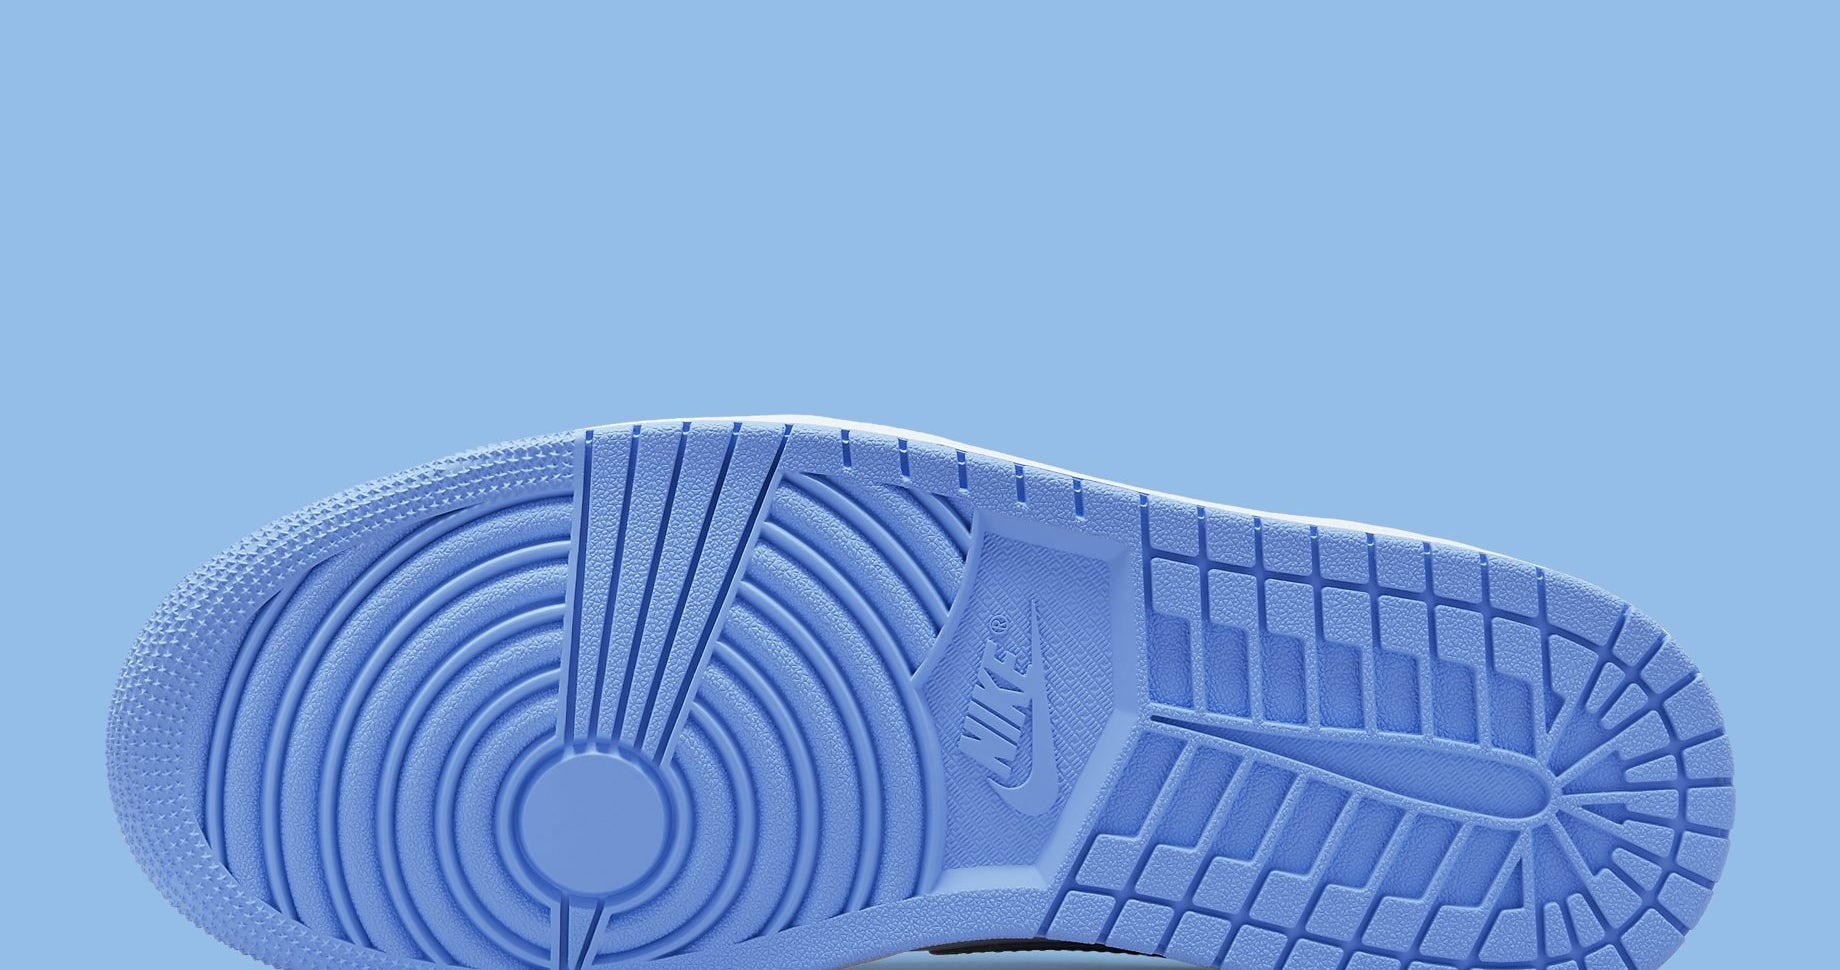 Detailed Look At The Air Jordan 1 High UNC Toe - Sneaker News